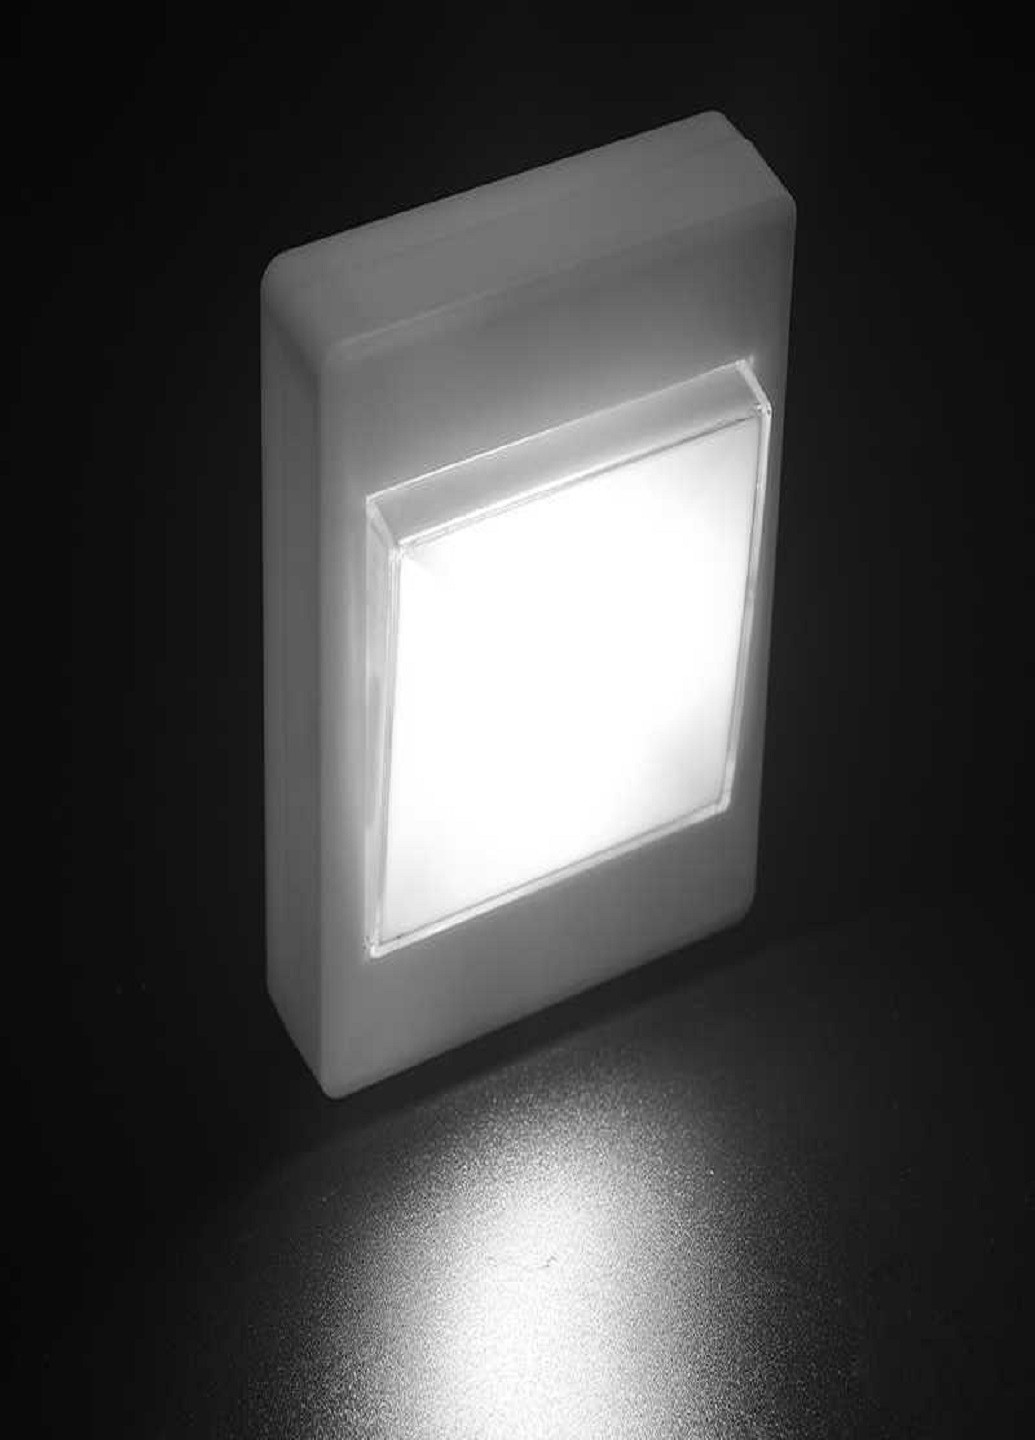 LED лампа выключатель светильник на батарейках 3Вт VTech (253319196)